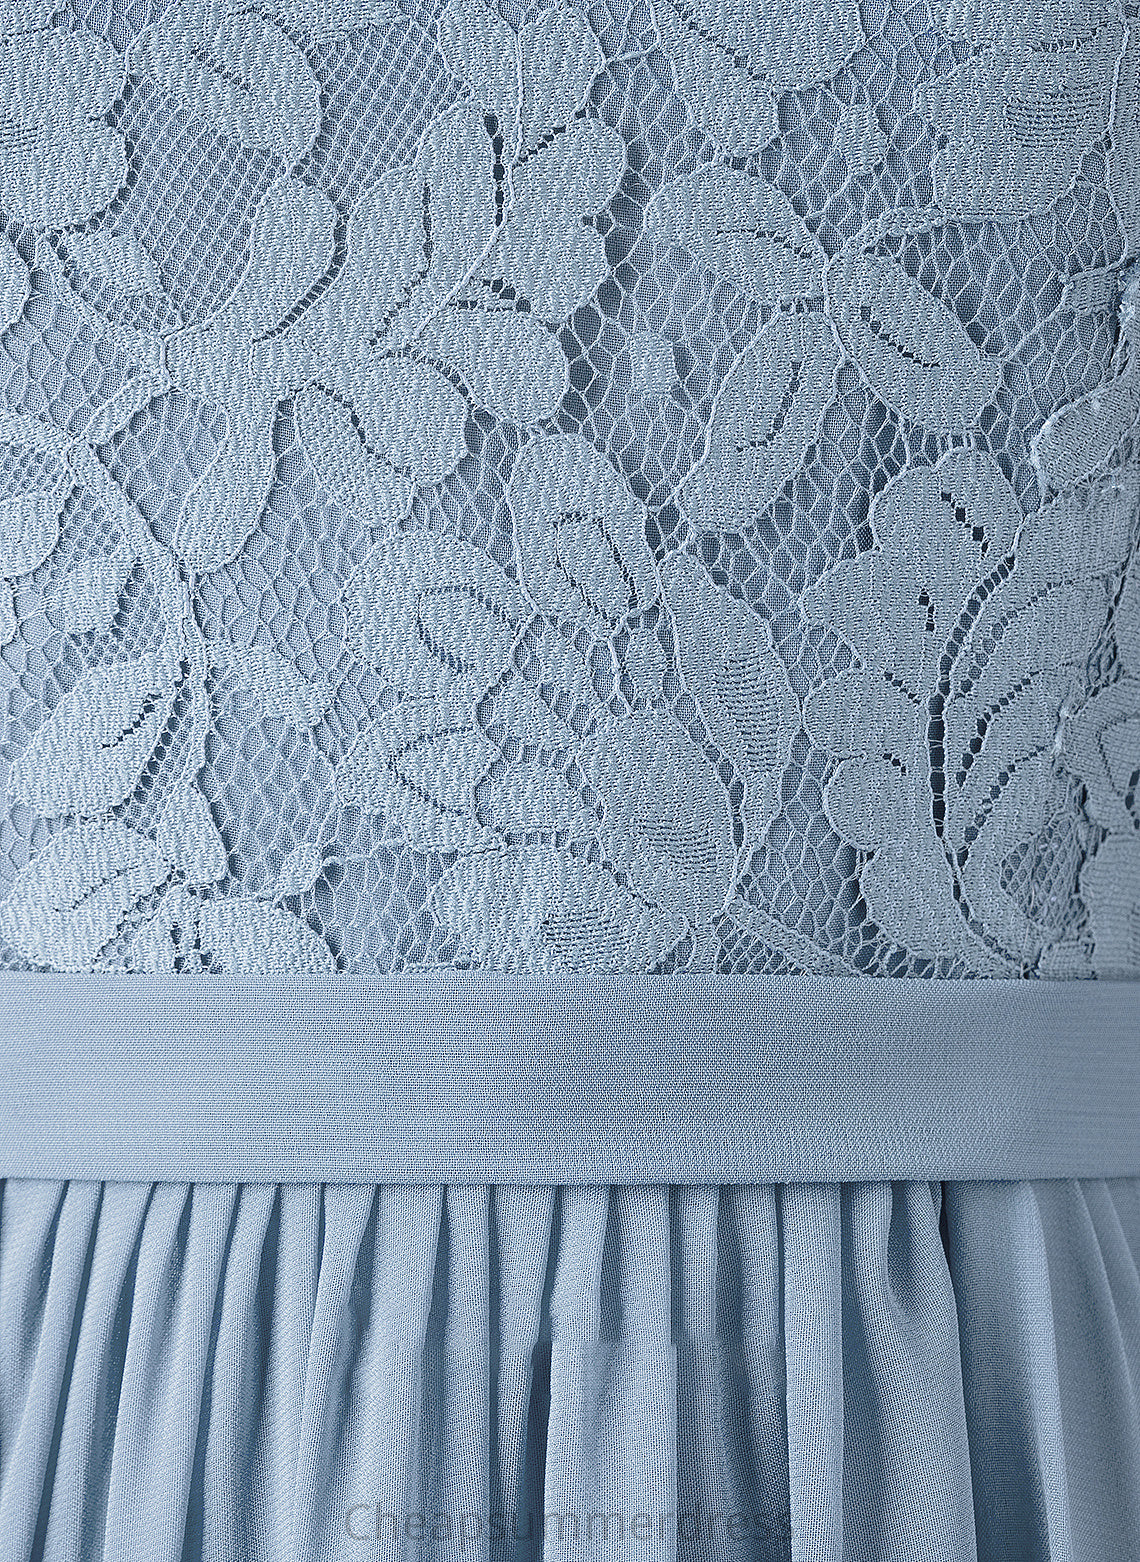 Silhouette Length Neckline Embellishment A-Line ScoopNeck SplitFront Floor-Length Fabric Pamela One Shoulder Floor Length